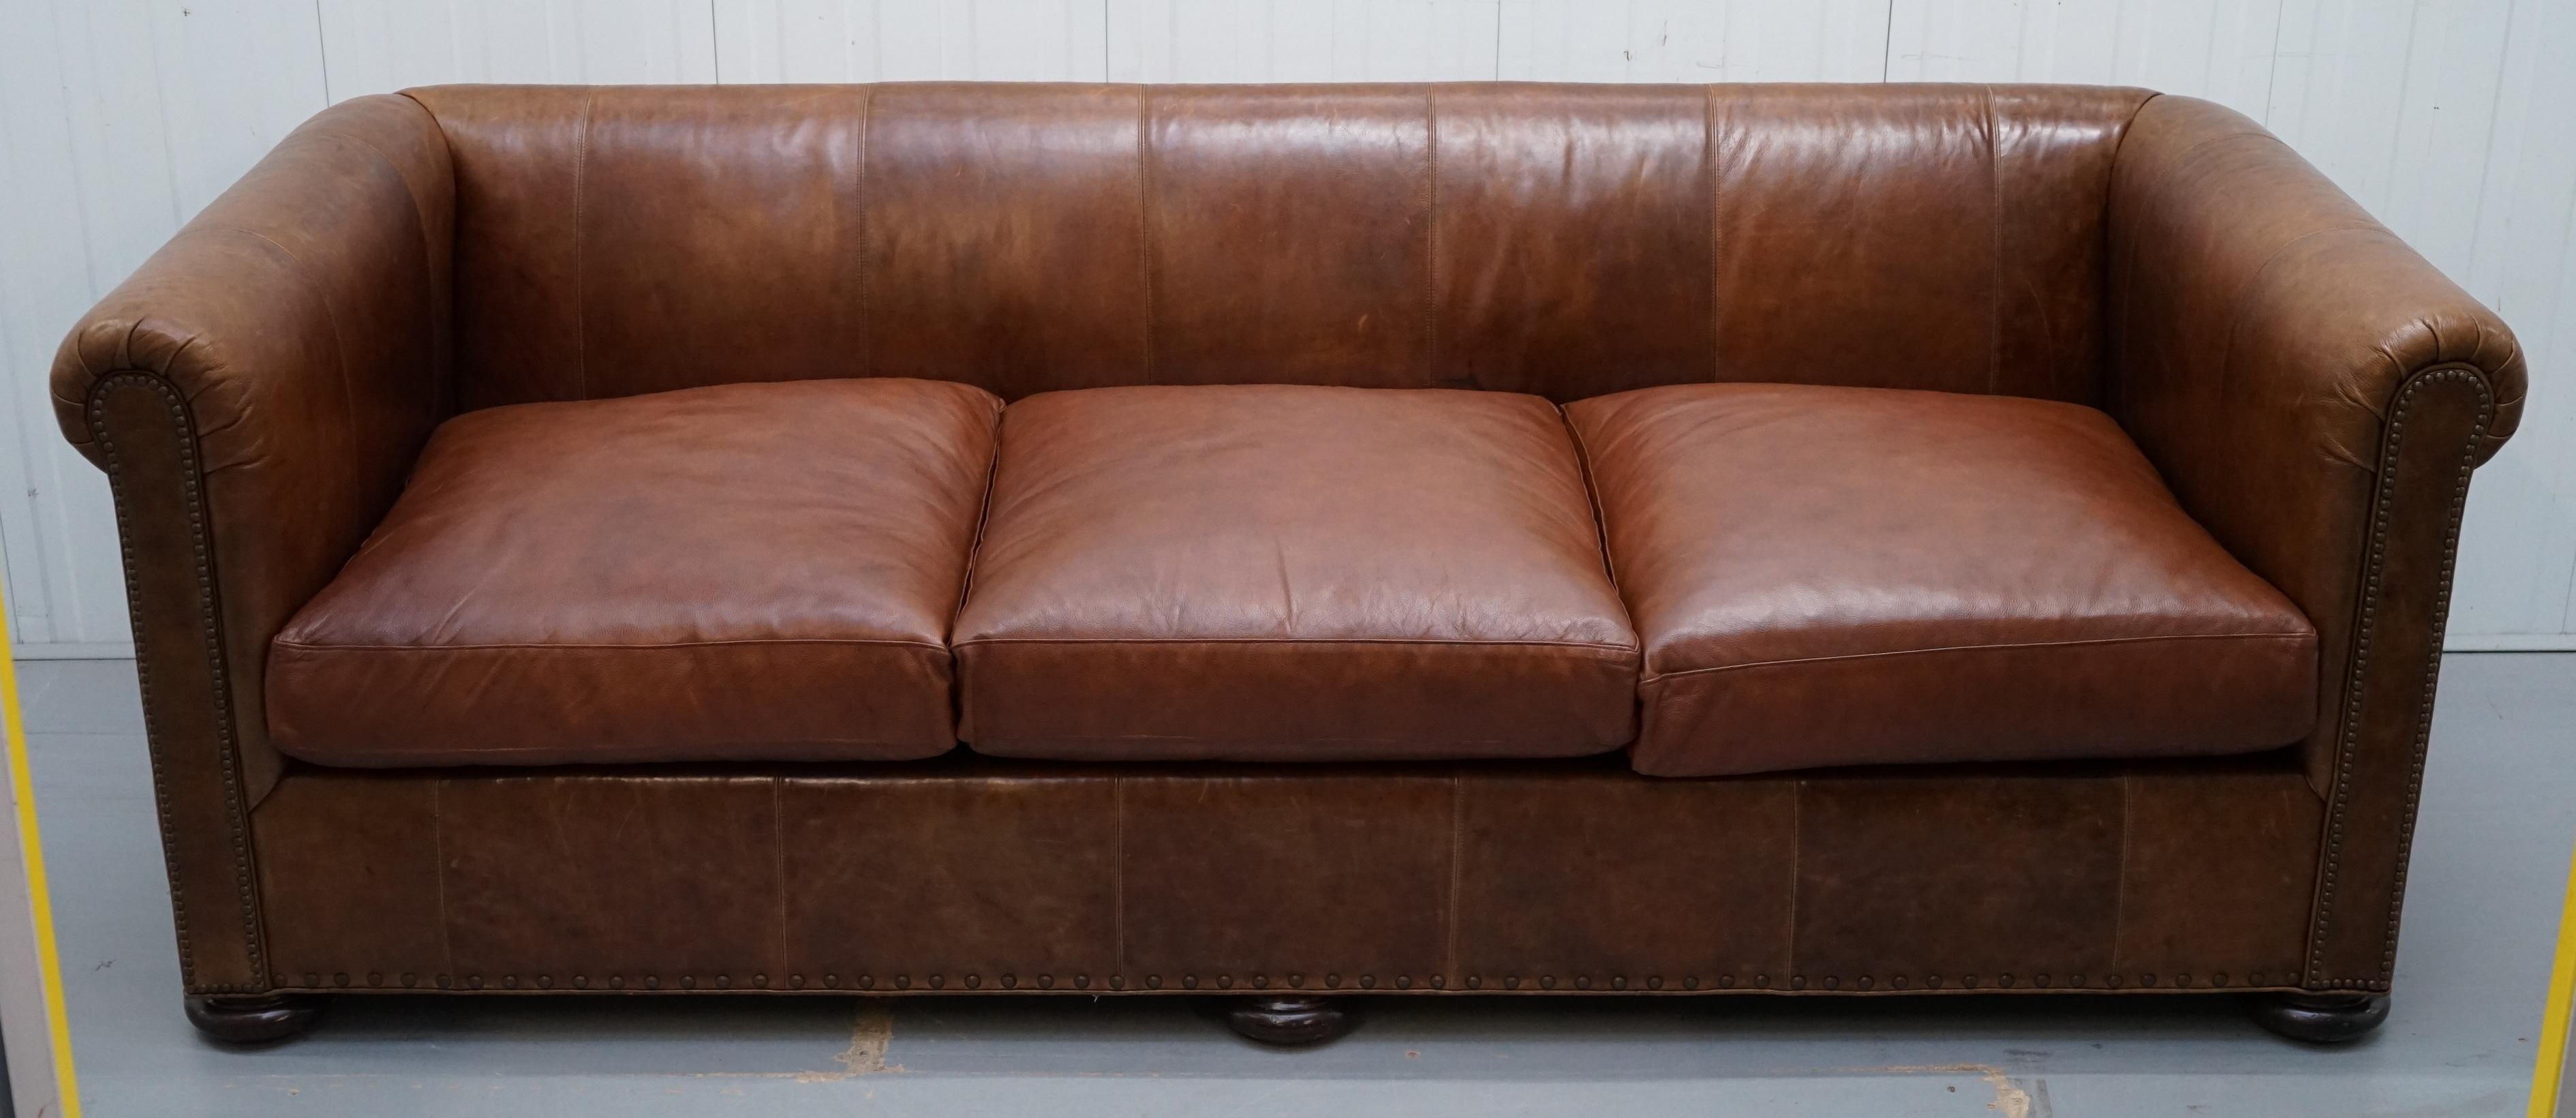 lillian august leather sofa